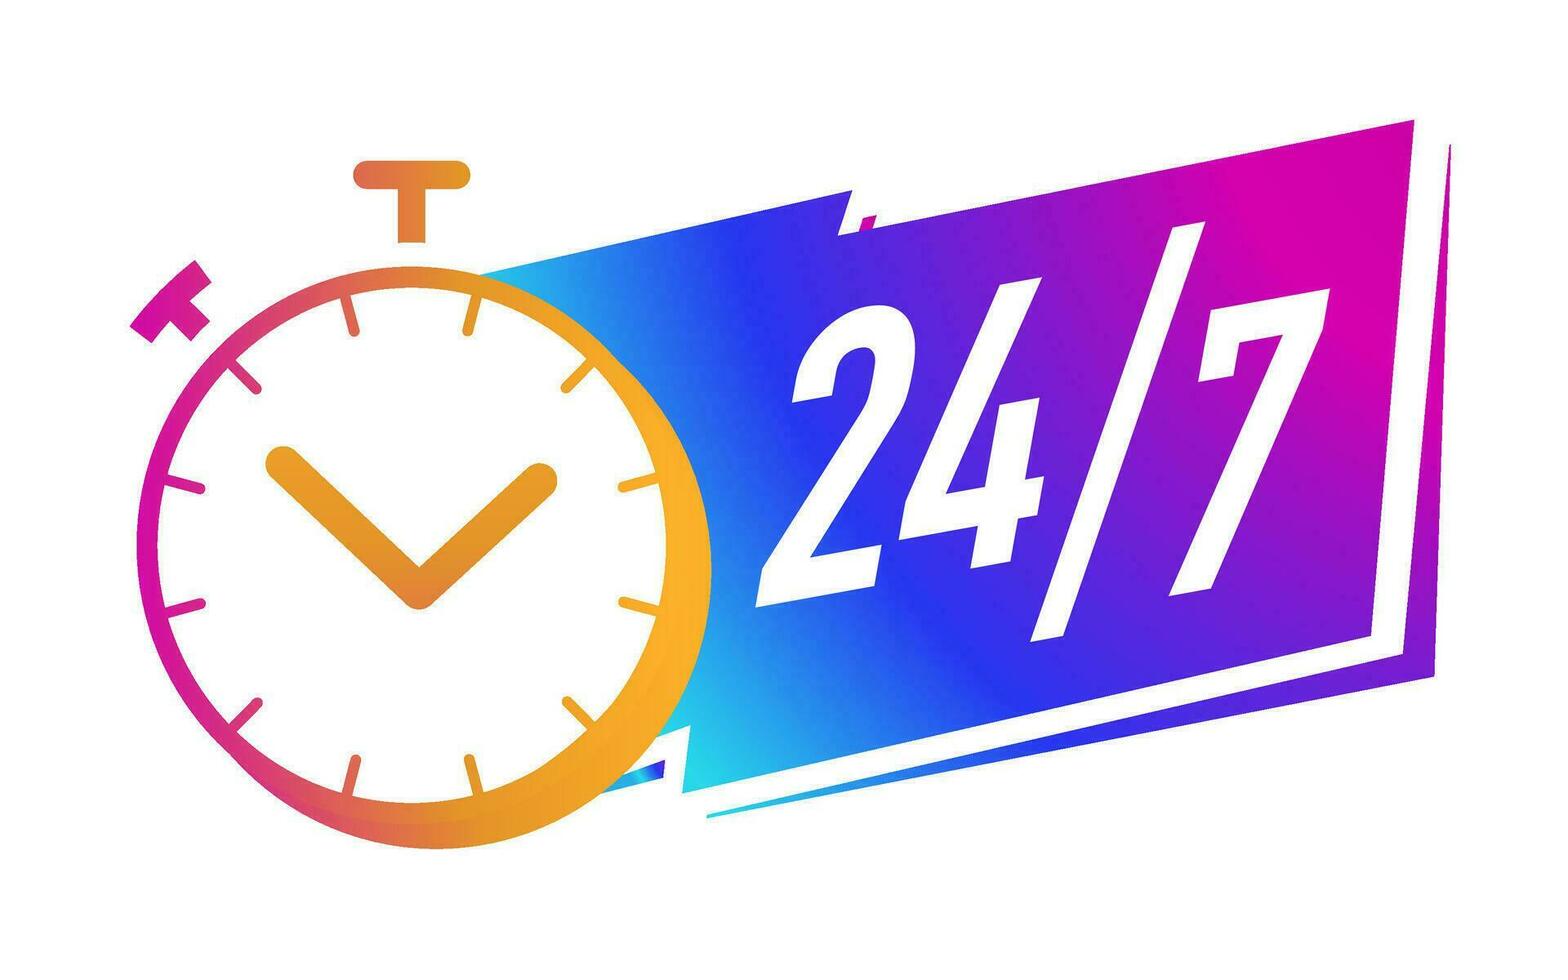 24 7 7 horas Temporizador símbolo degradado color estilo vector